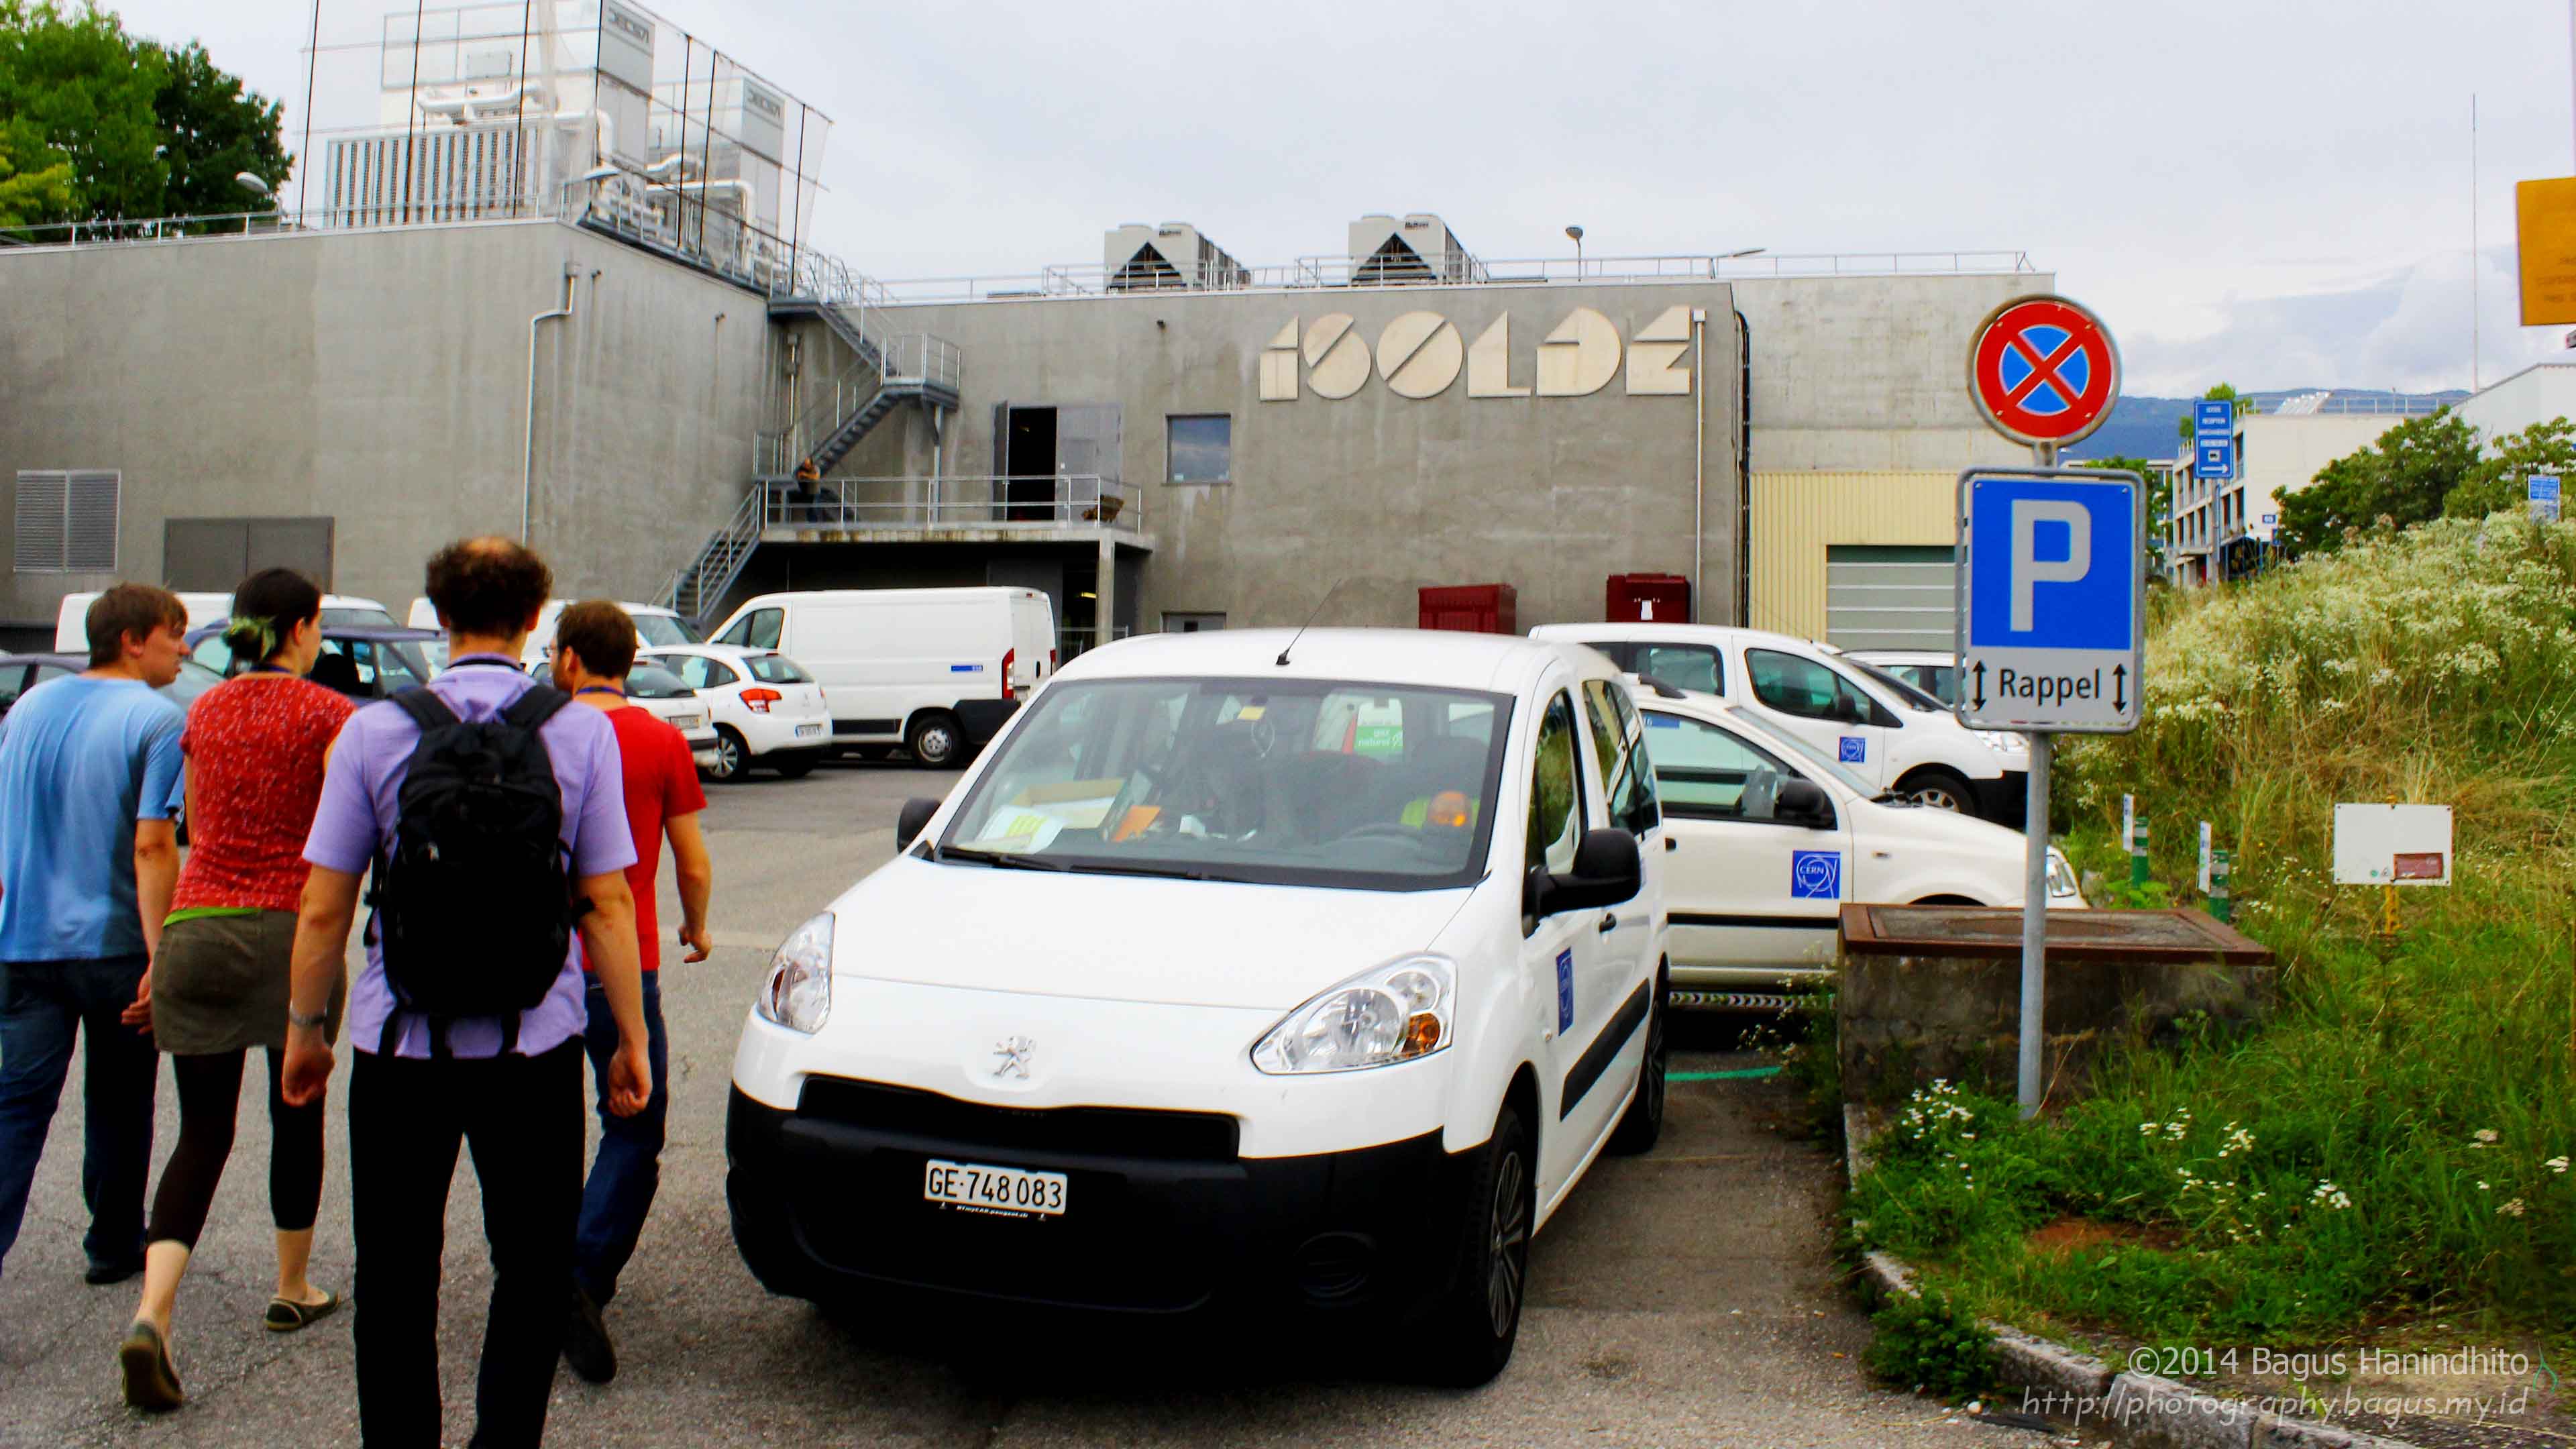 The Radioactive Ion Beam facility (ISOLDE) building in CERN Meyrin Site, Geneva-Switzerland.